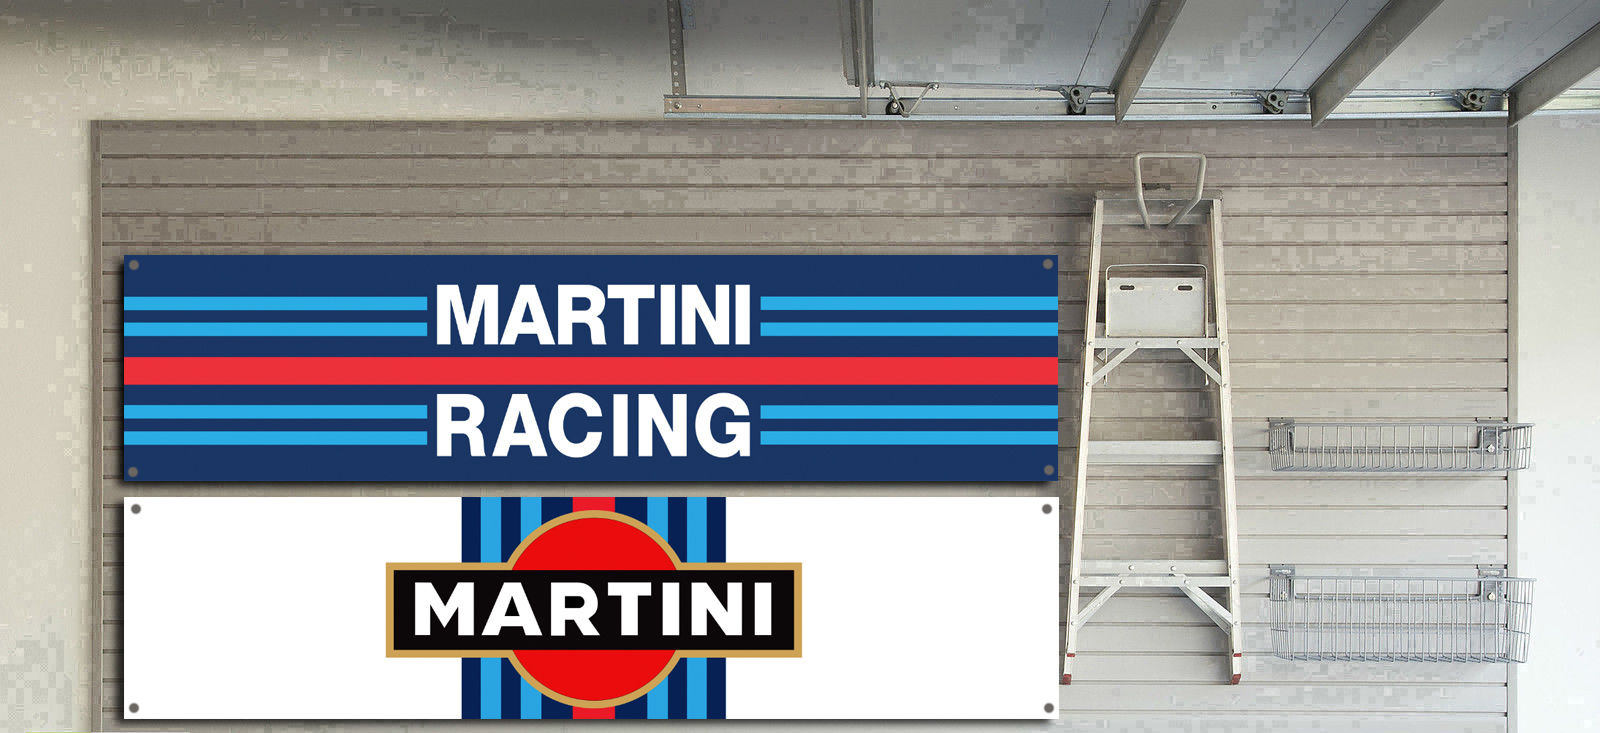 garage Martini Racing Banner heavy duty for workshop mancave